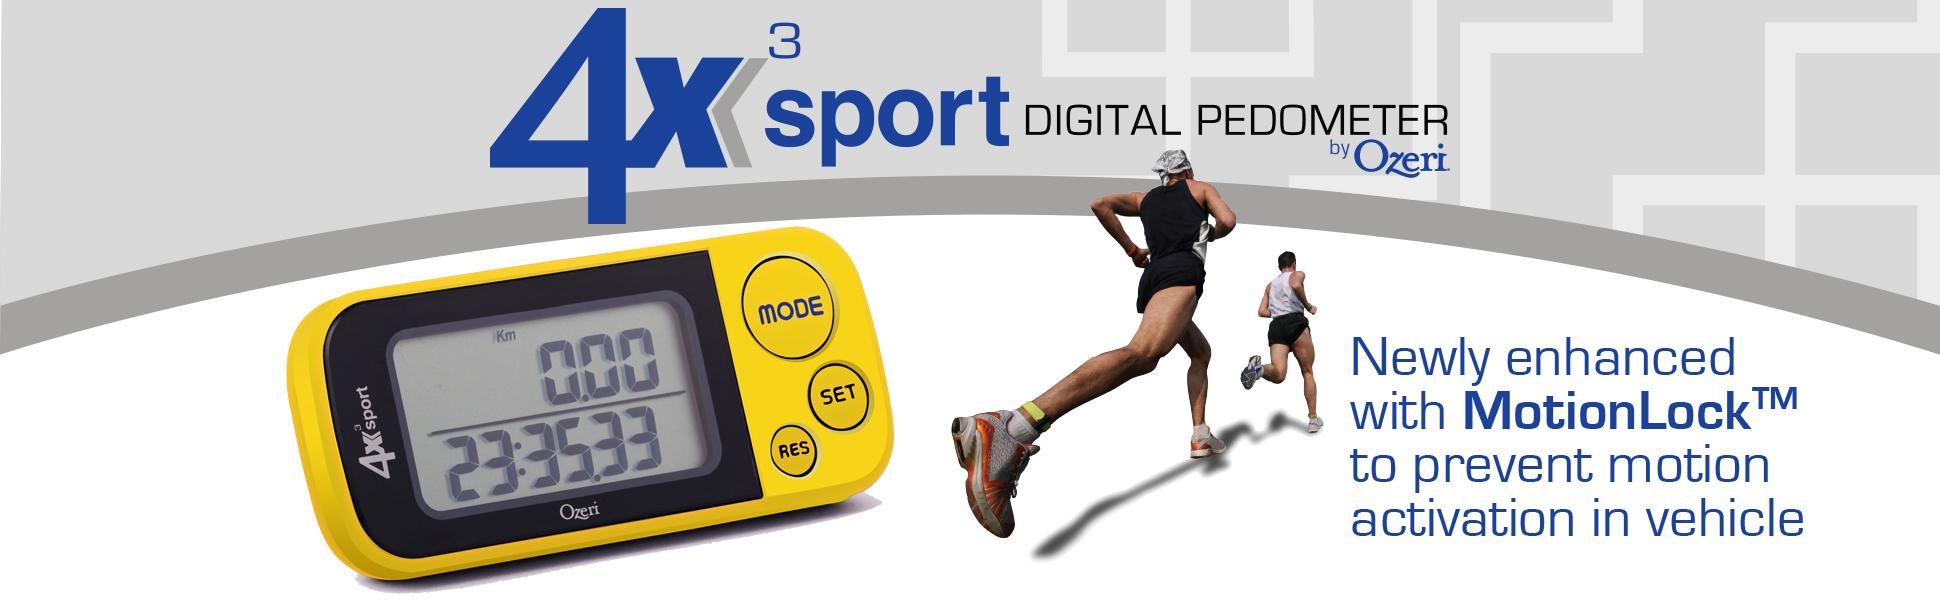 with Multi-Axis Detection & 30 Day Memory Ozeri 4x3sport Tri-Mode Activity Tracker Walk, Run, & Stair Climb 